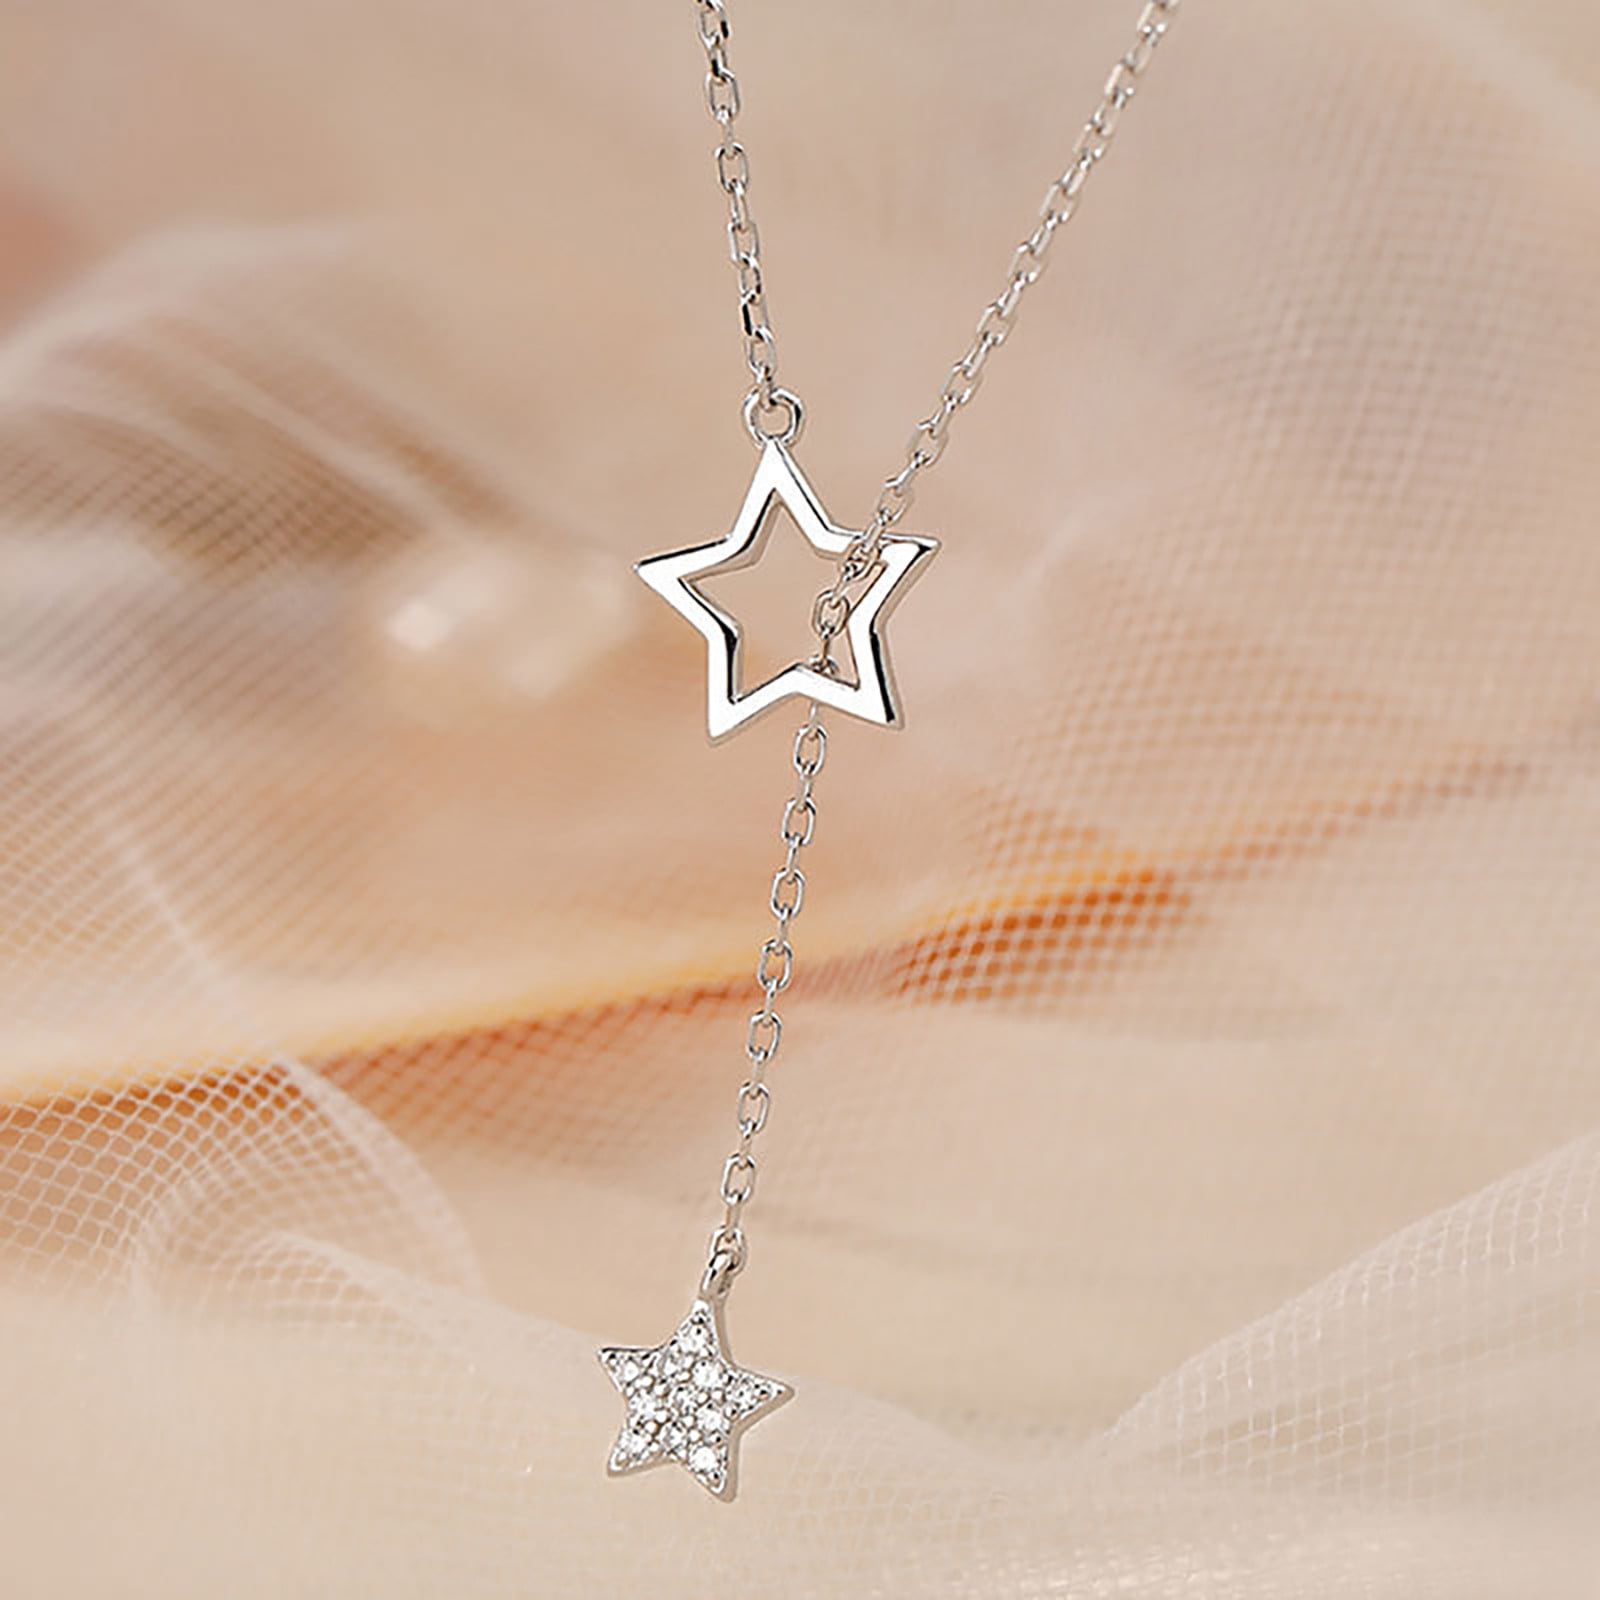 Yumilok Jewelry Sets for Women-Nautical Anchor Sterling Silver Necklace  Earrings Dainty Locket Pendant Necklace Stud Earrings for Teen Girls  Friends